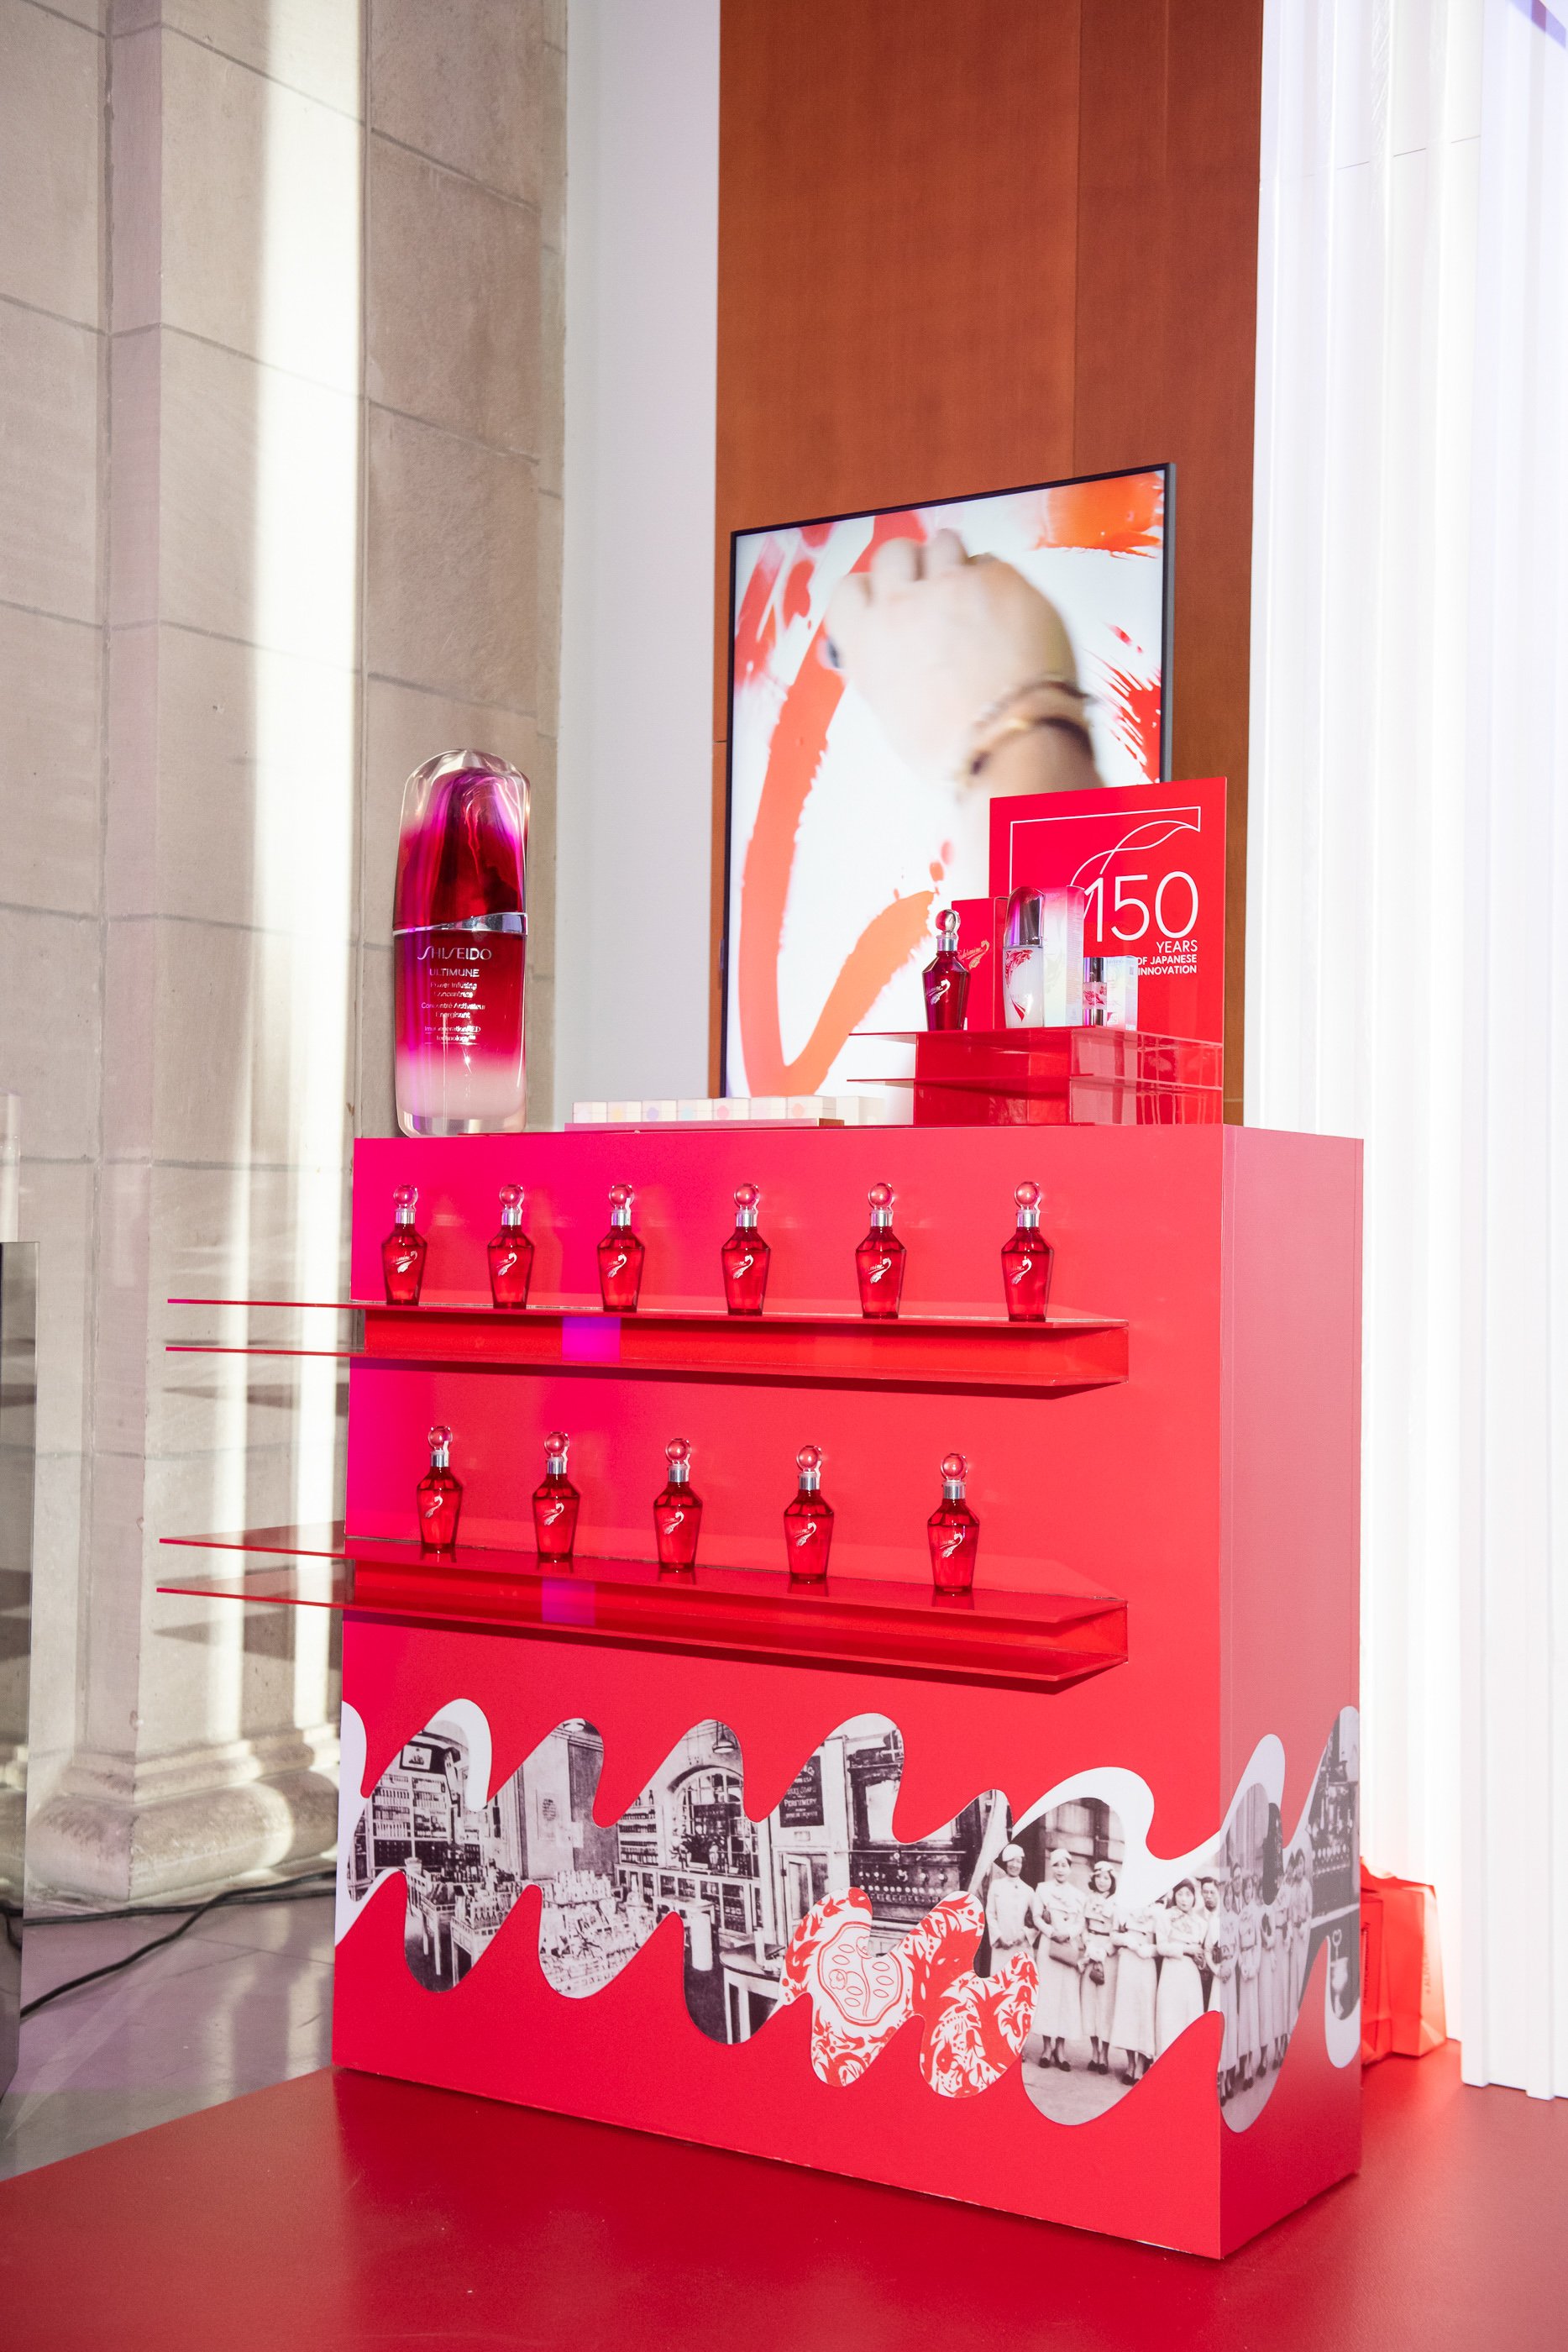 Shiseido-AGO-150th-Anniversary-Installation-Brand-Partnerships-Sponsorships-3-Art-Installation-Toronto.jpg